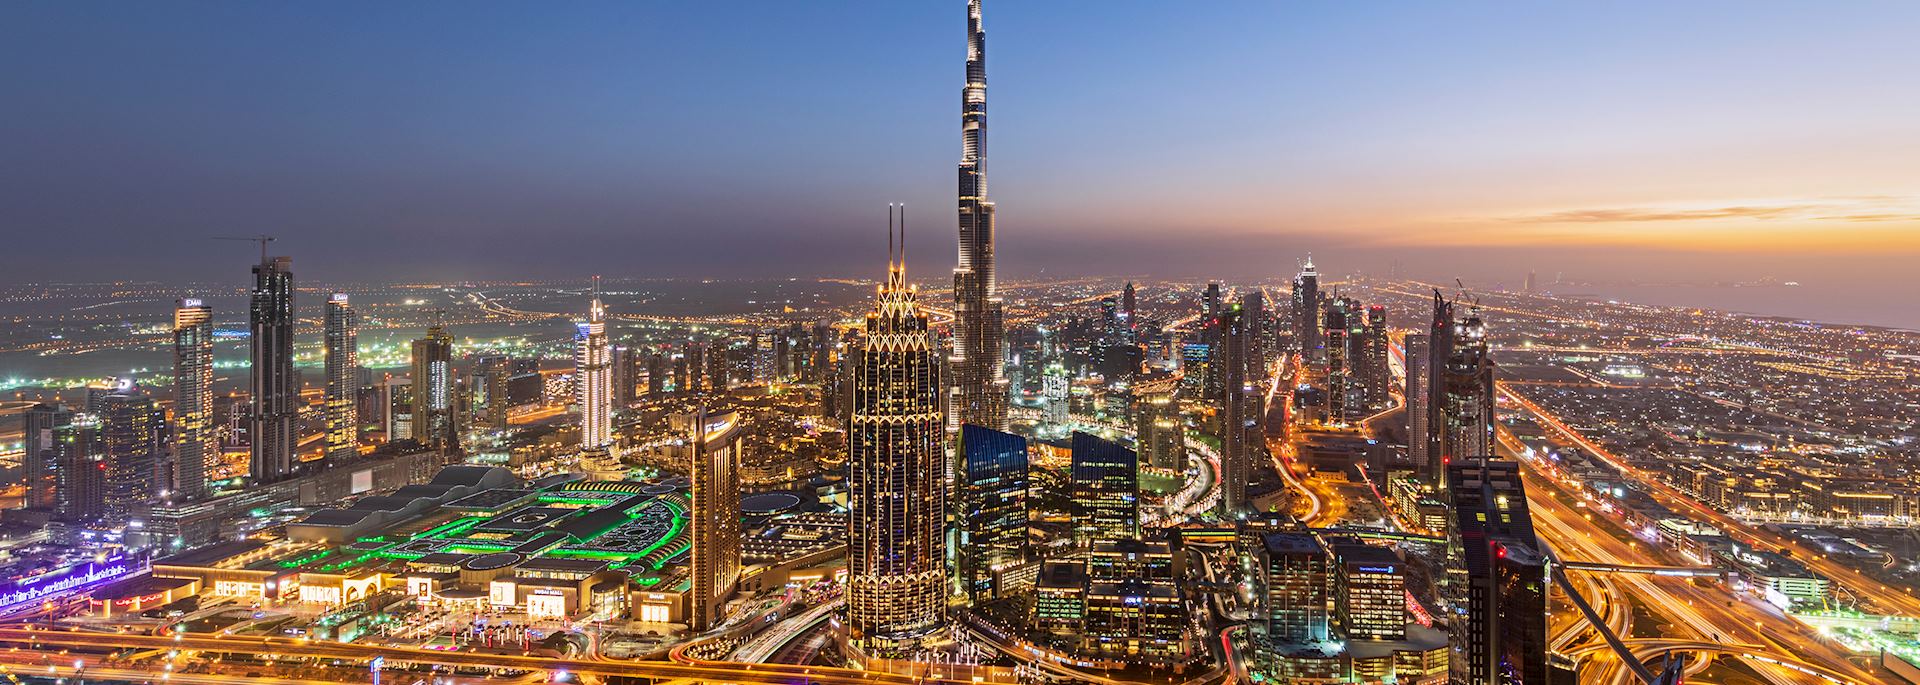 Dubai skyline with Burj Khalifa